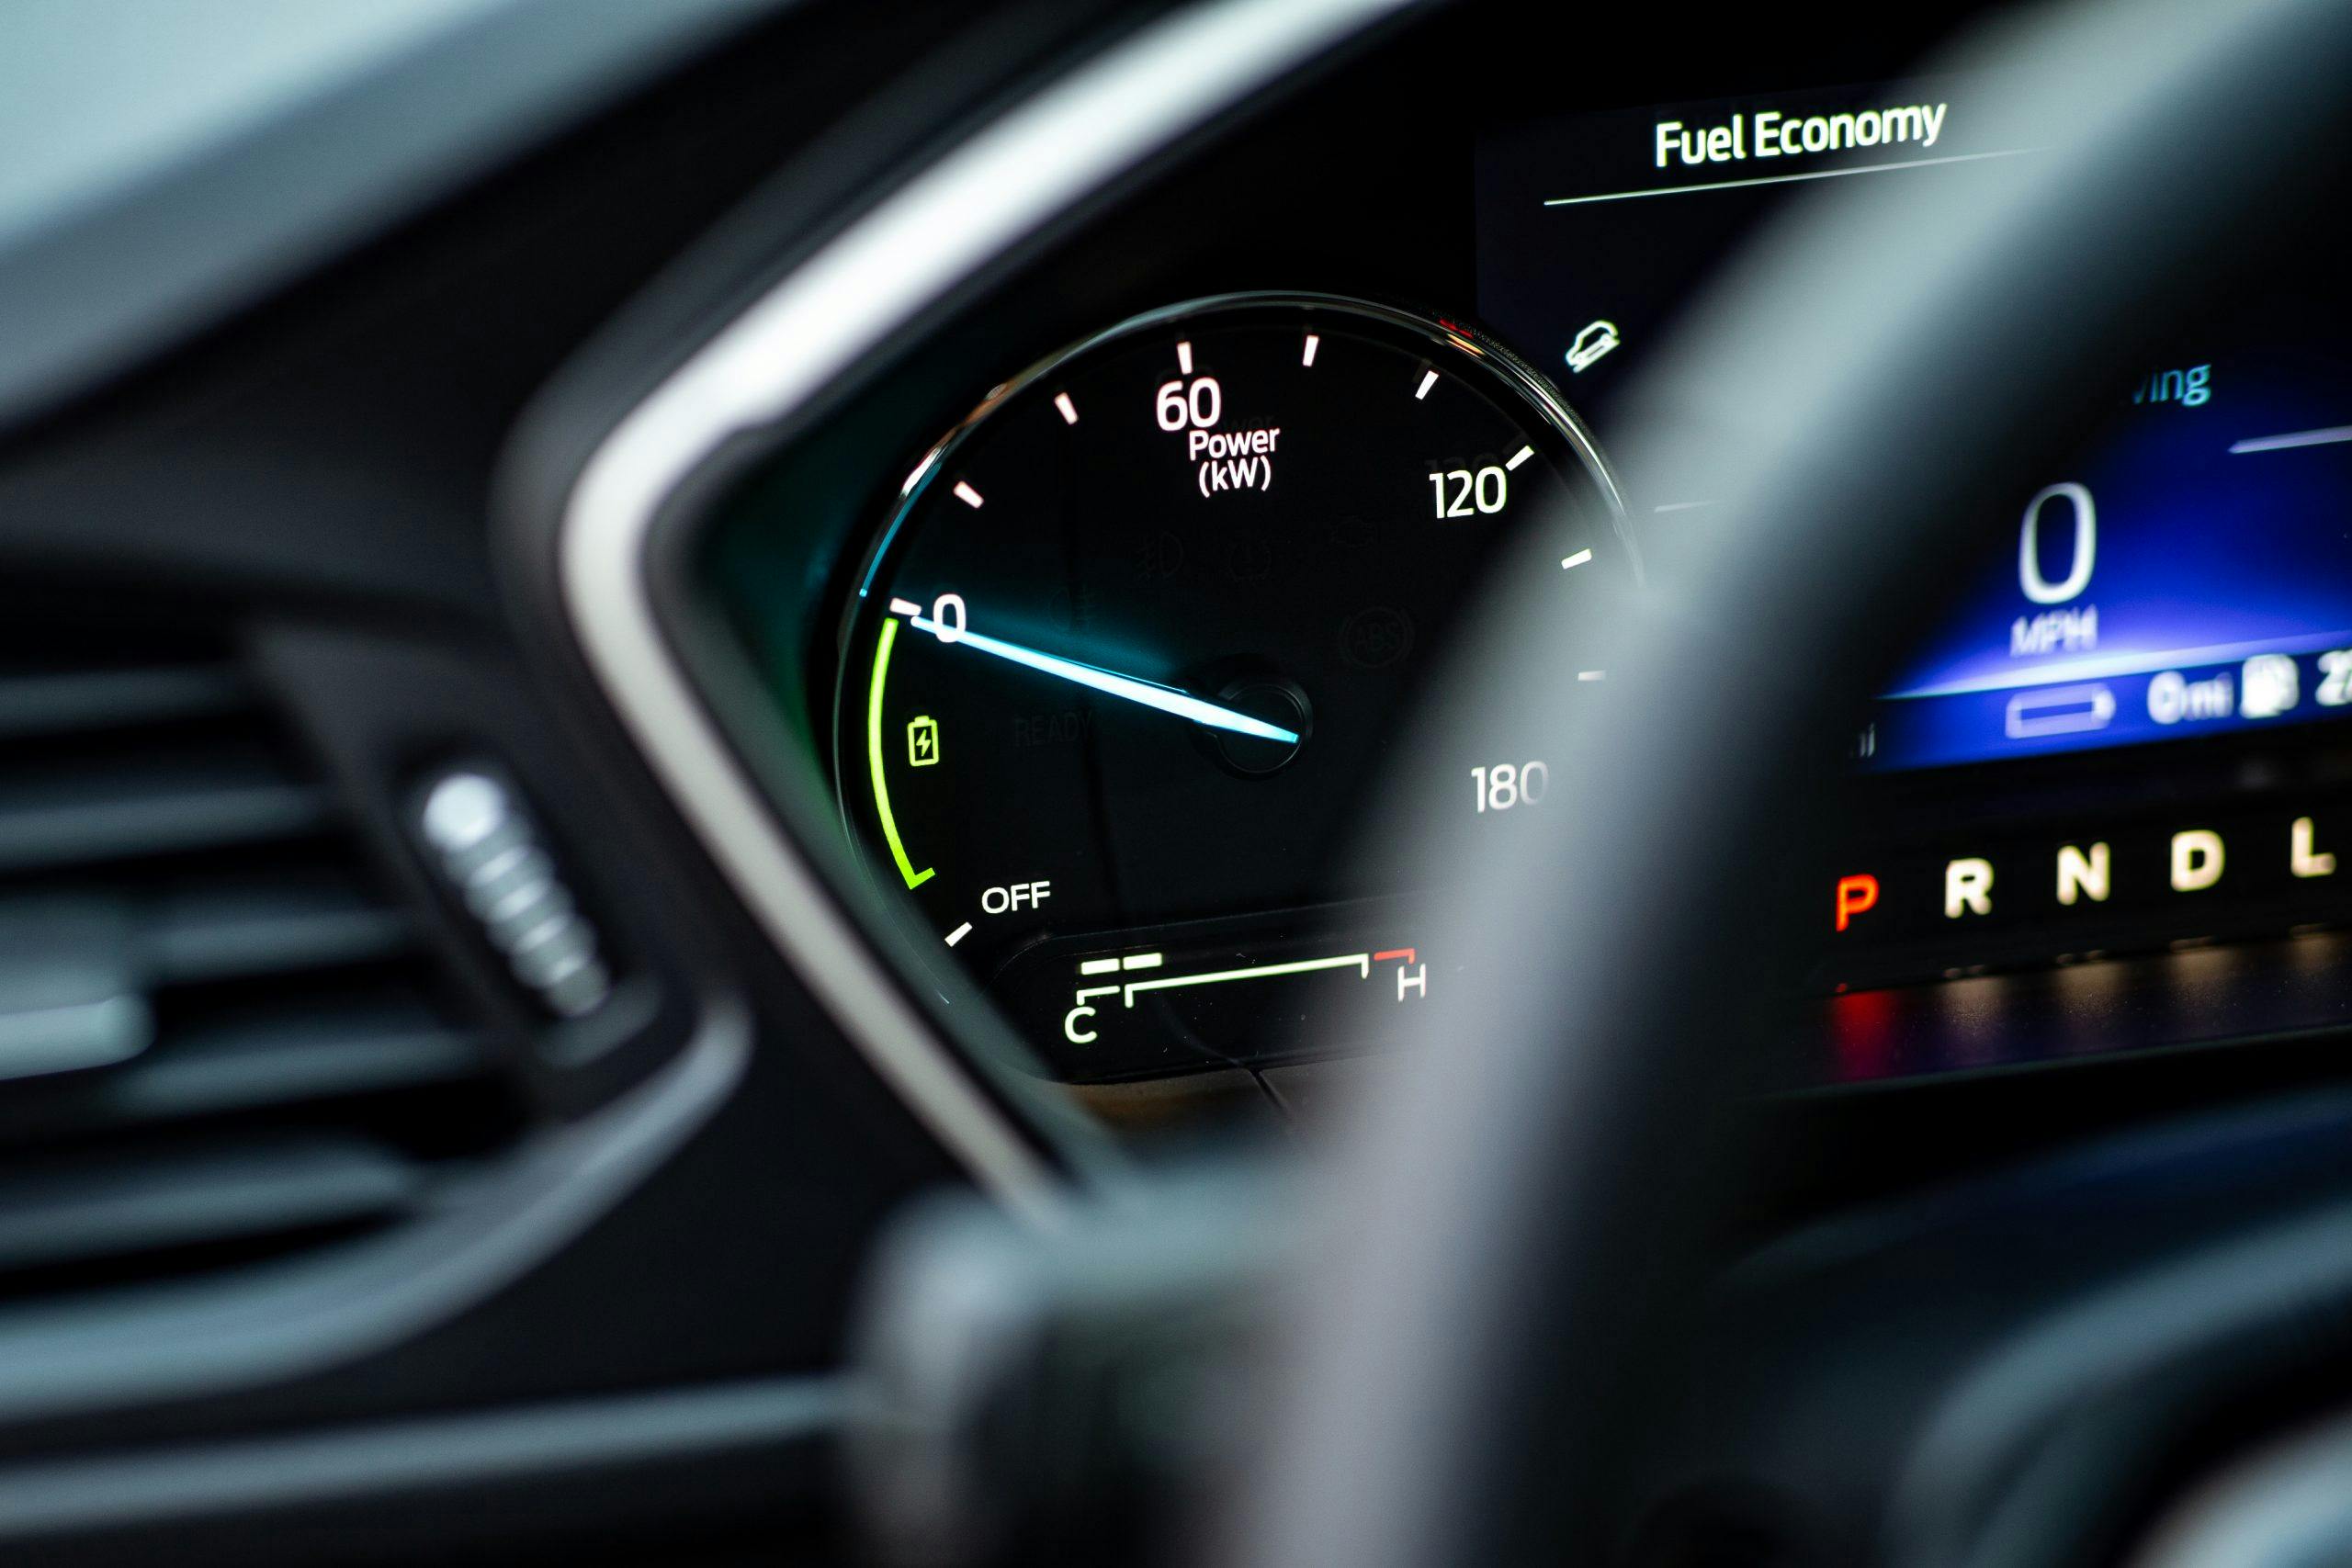 2021 Ford Escape PHEV interior battery gauge